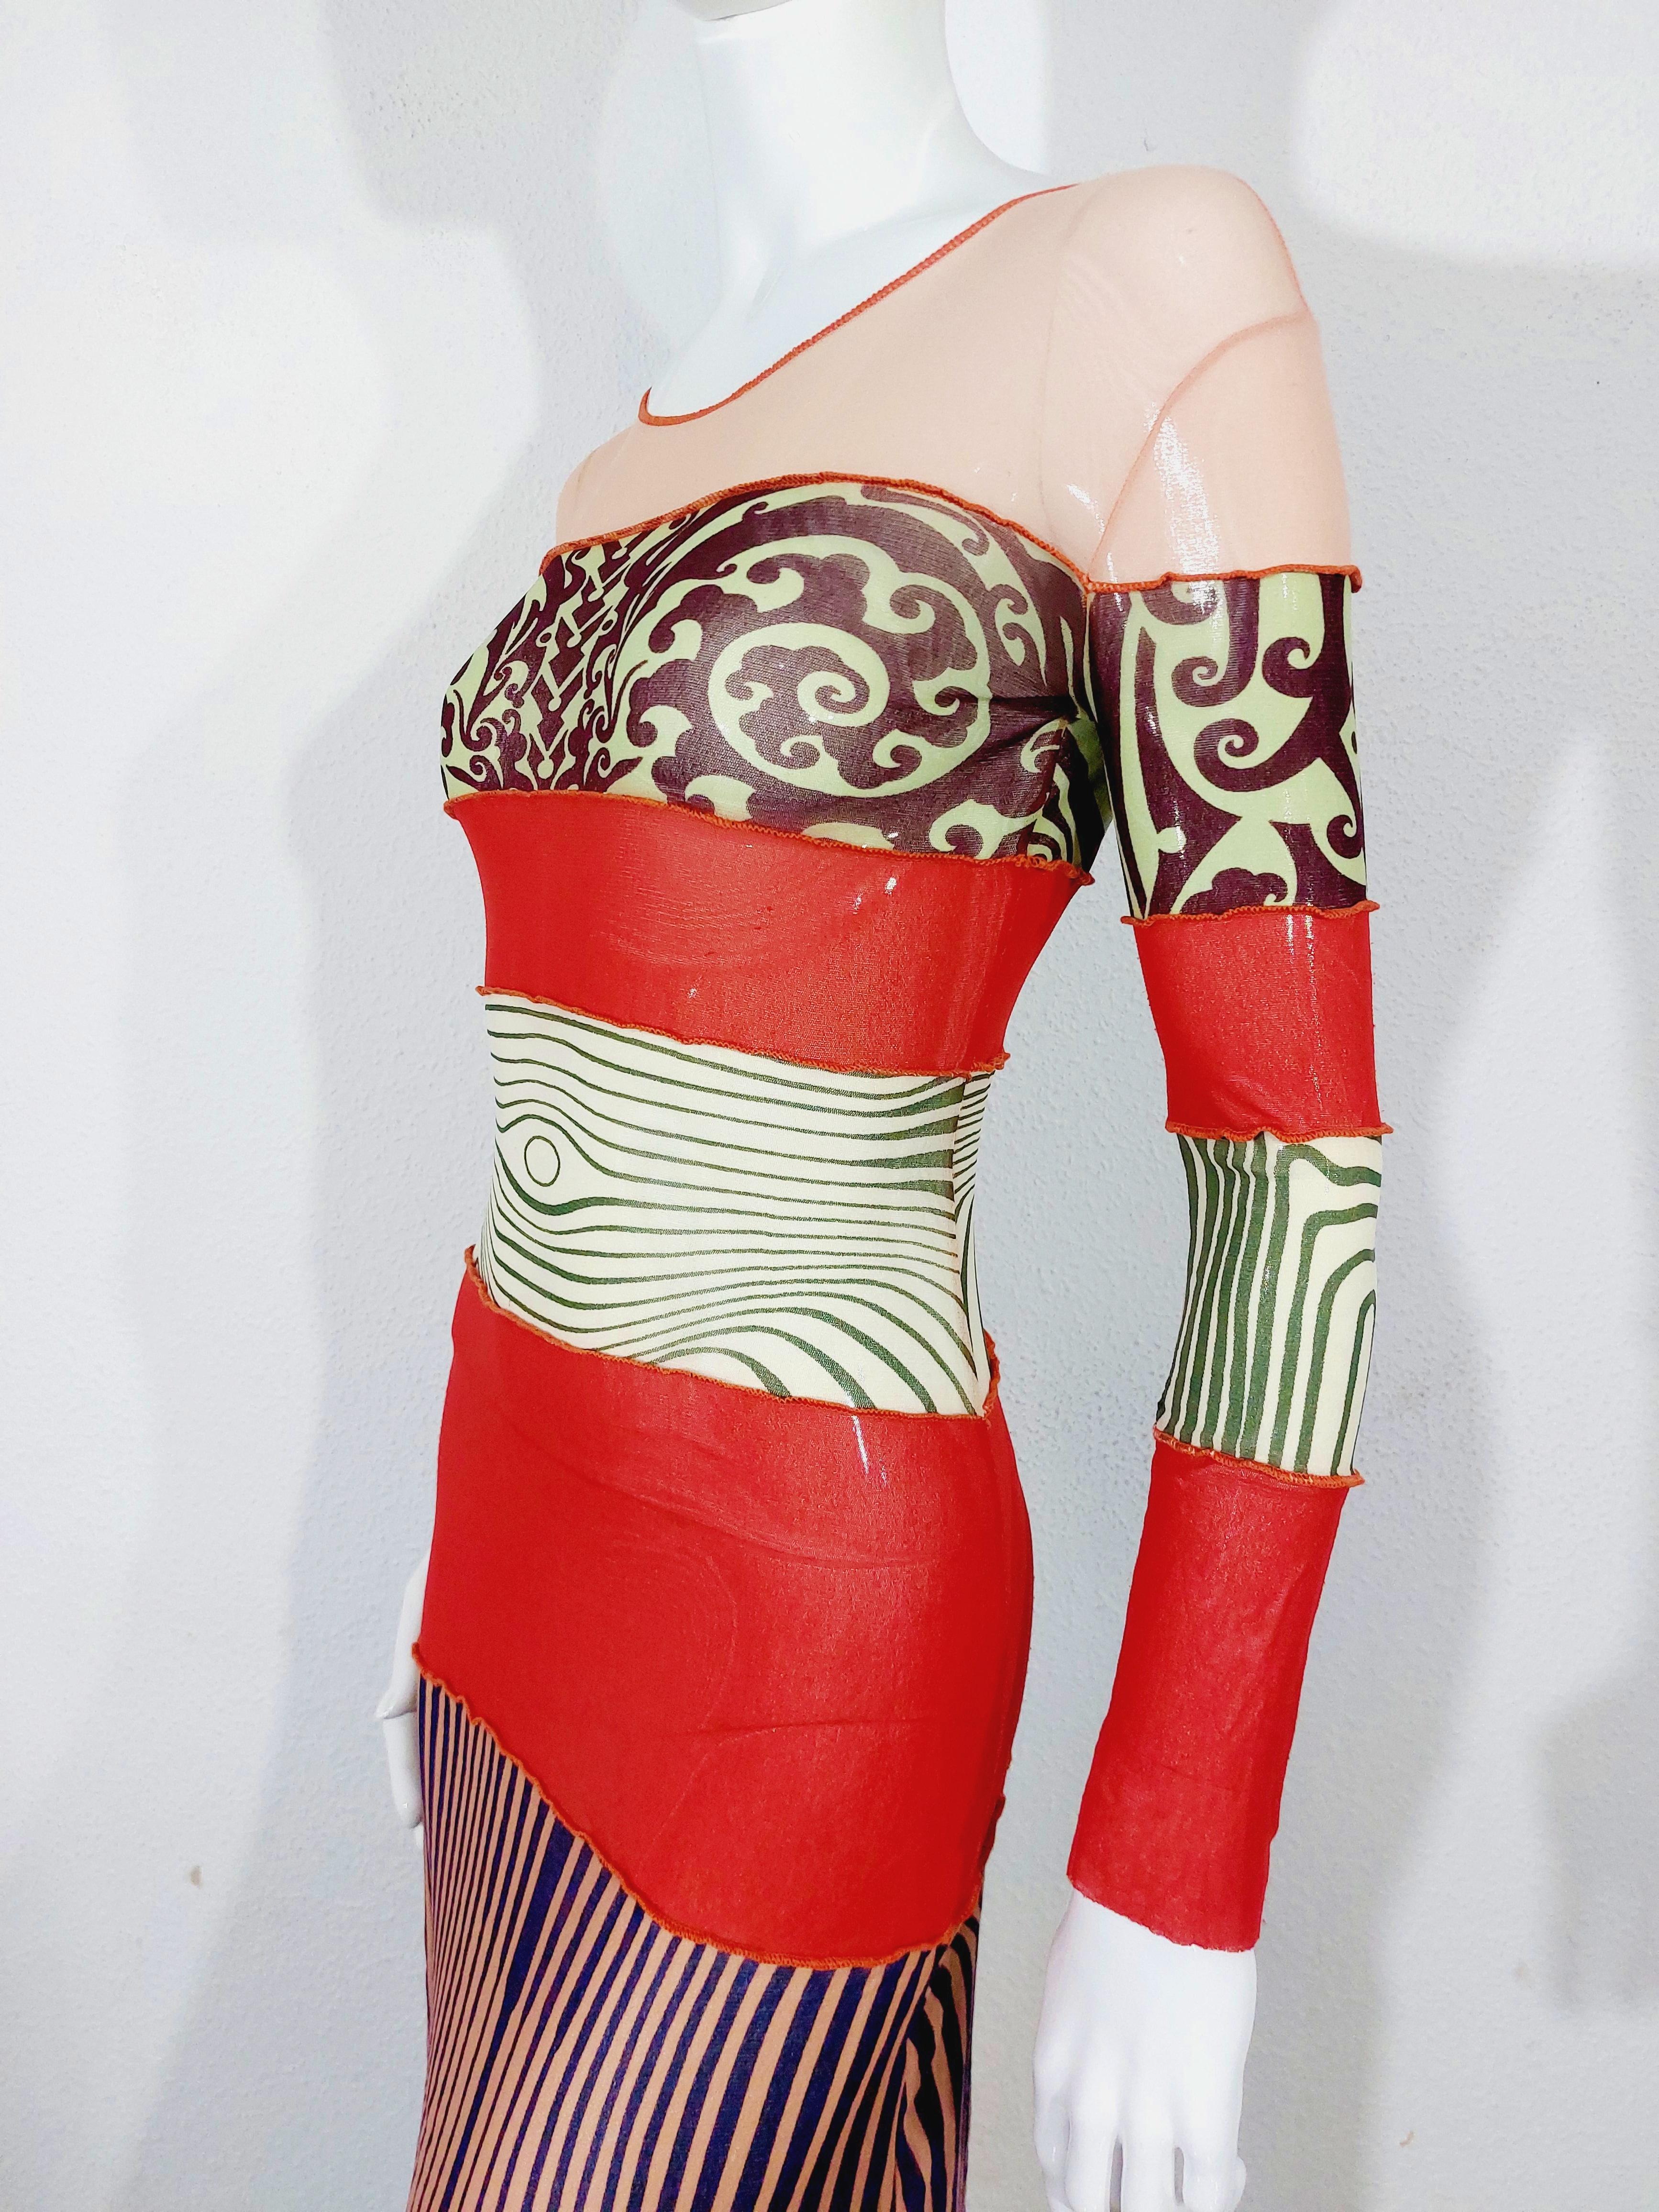 Jean Paul Gaultier Optical Illusion Nude Ethic Trompe l'oeil Vanessa Guide Dress For Sale 5